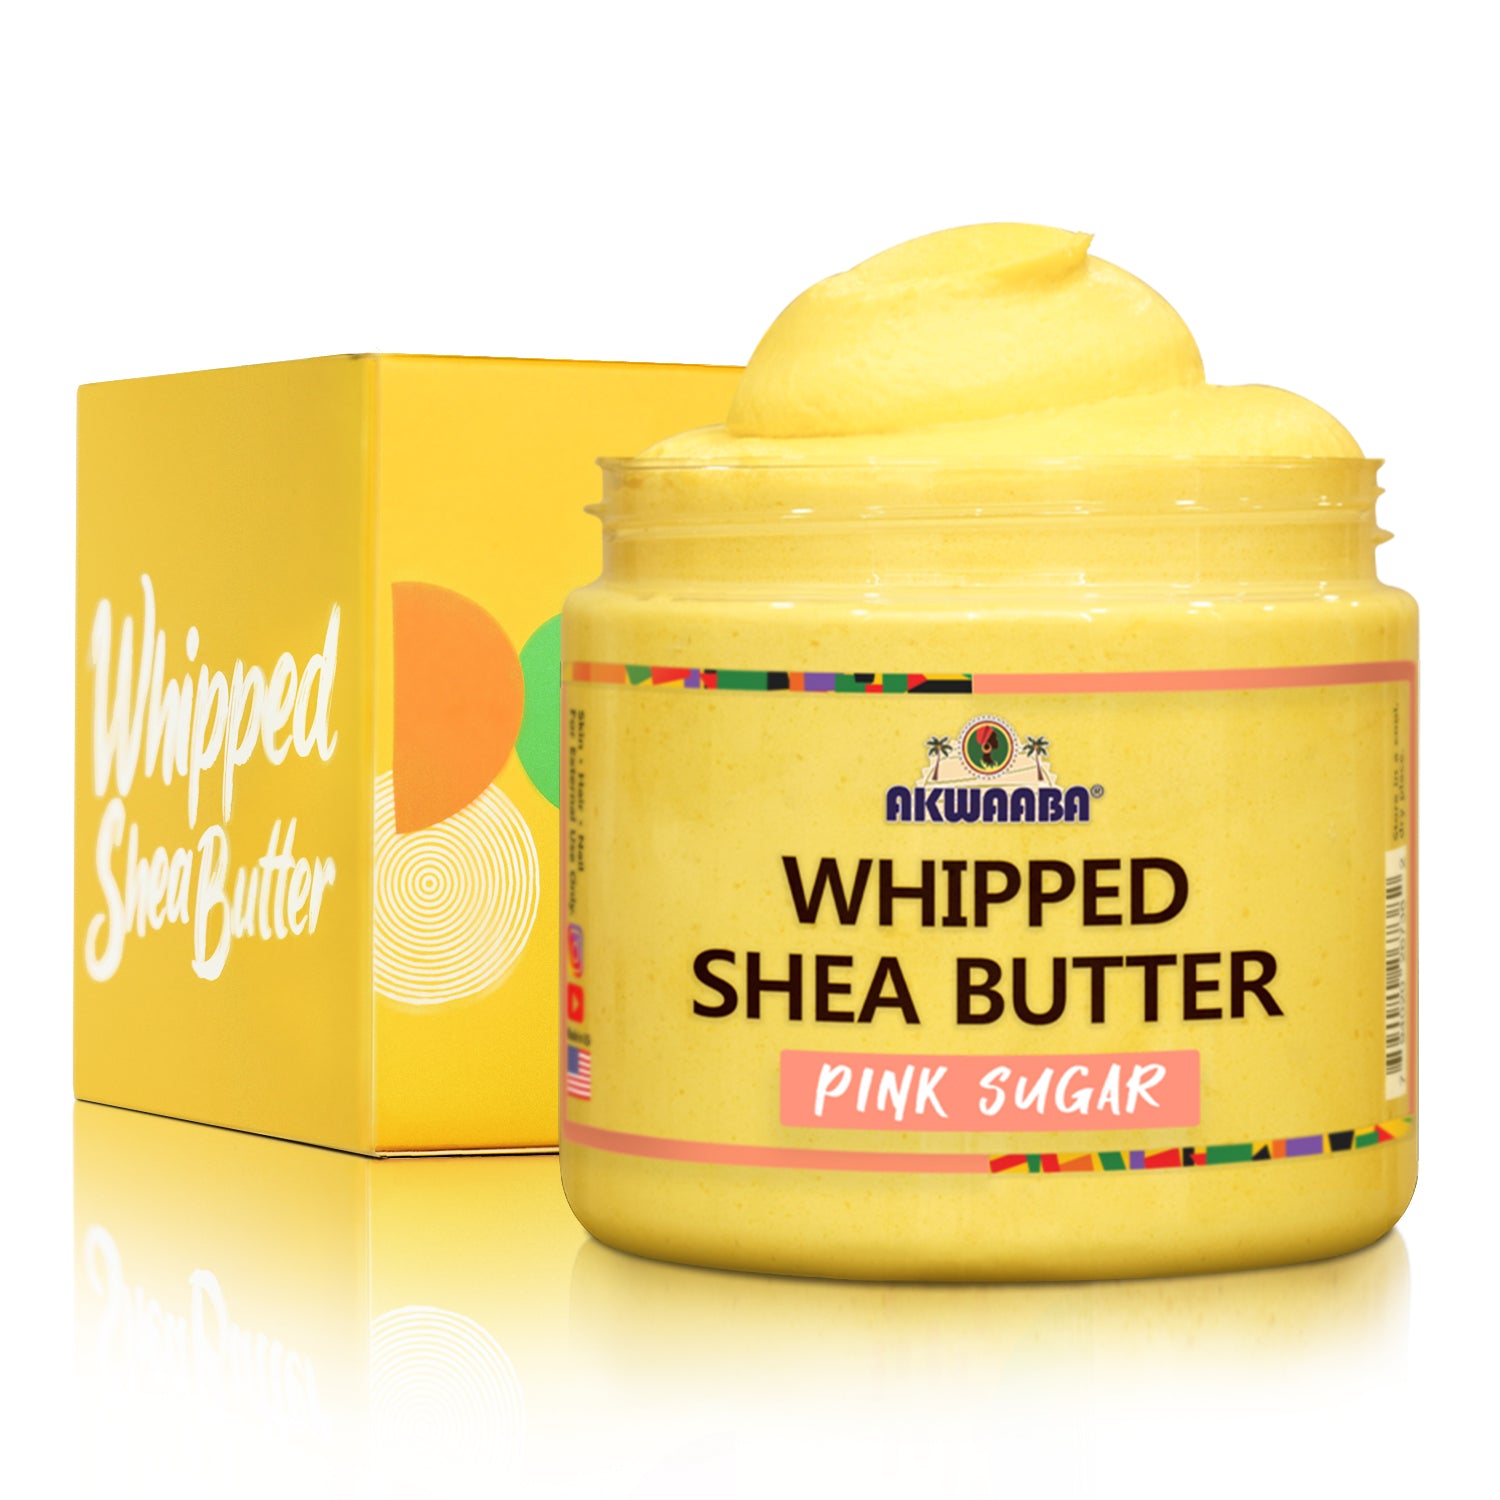 Whipped Shea Butter(Pink Sugar) - 12 oz.